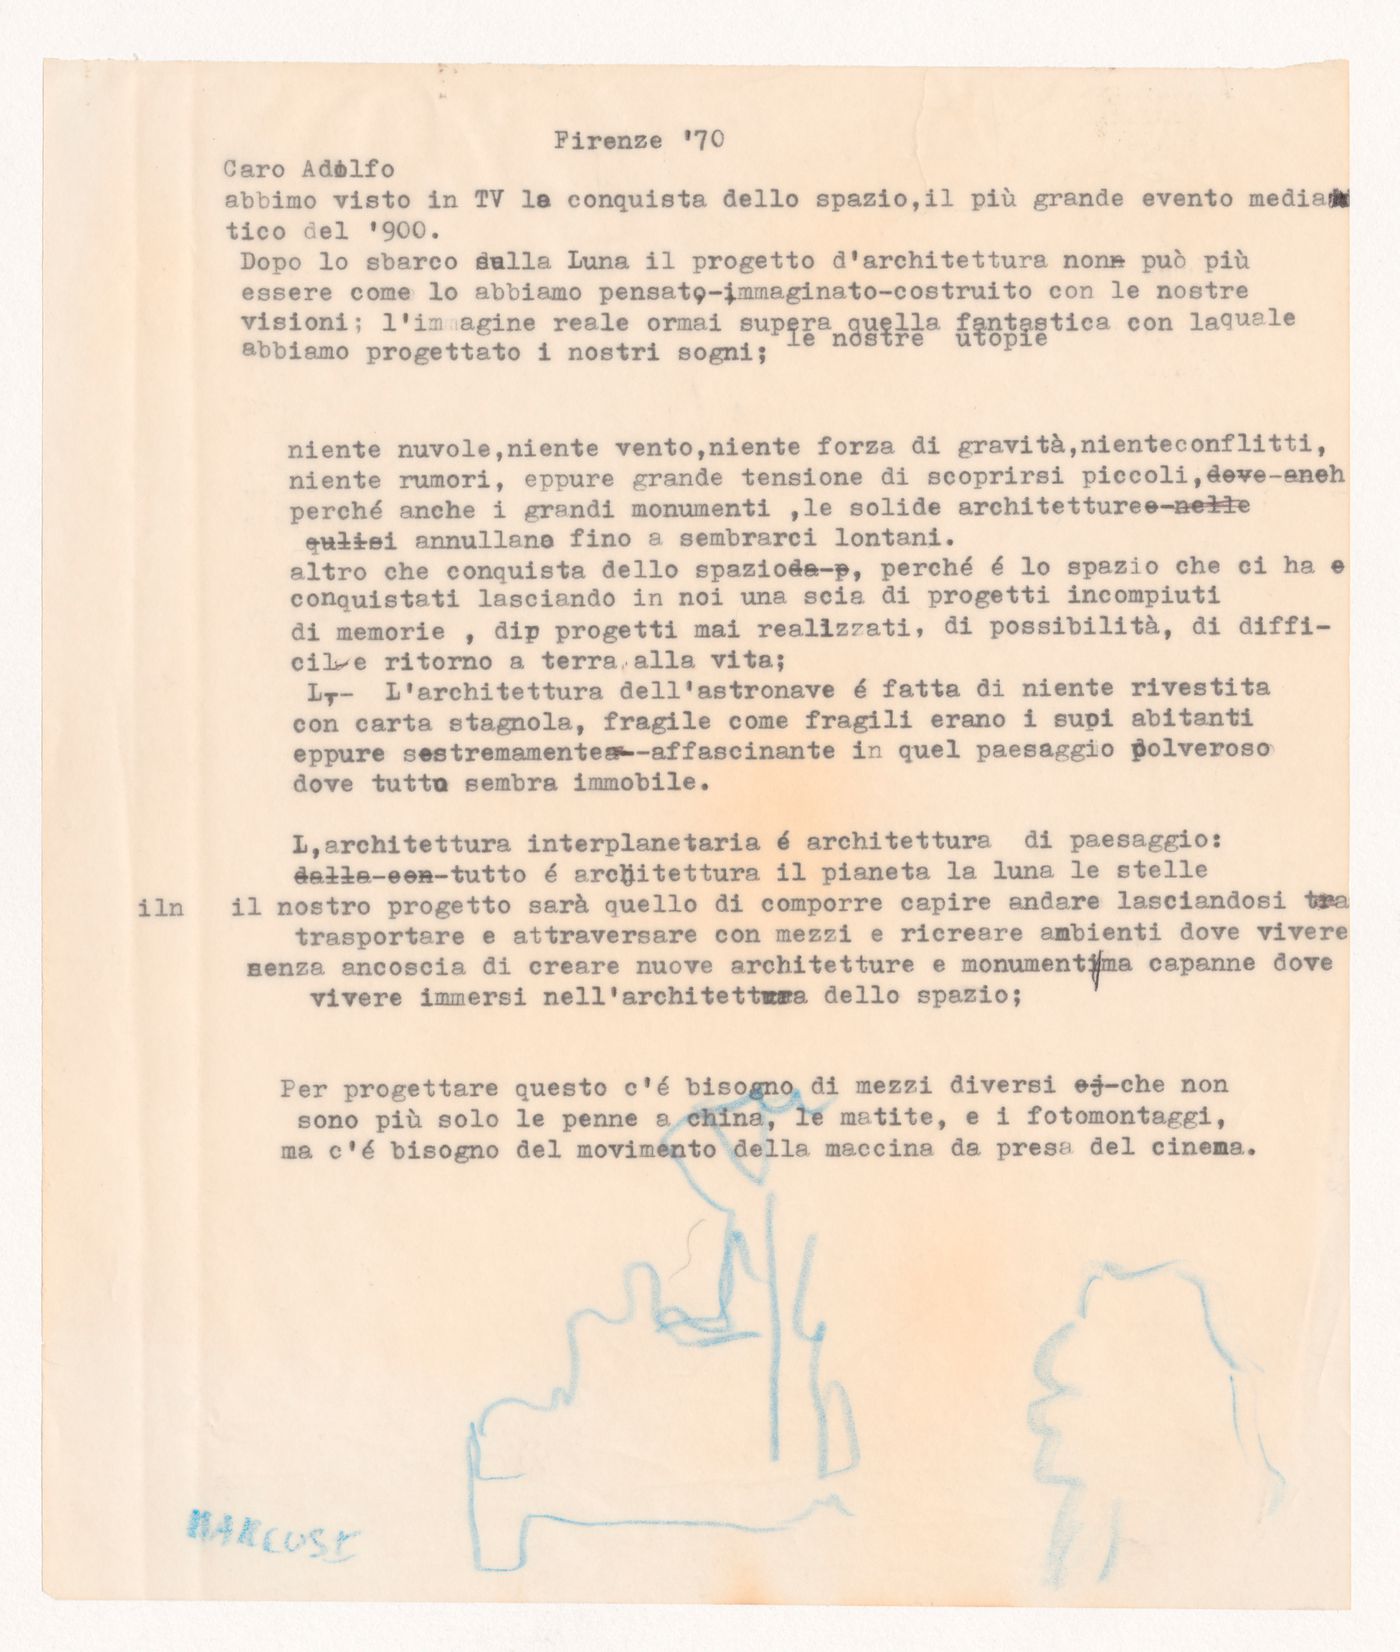 Letter to Adolfo Natalini for Architettura Interplanetaria [Interplanetary Architecture]